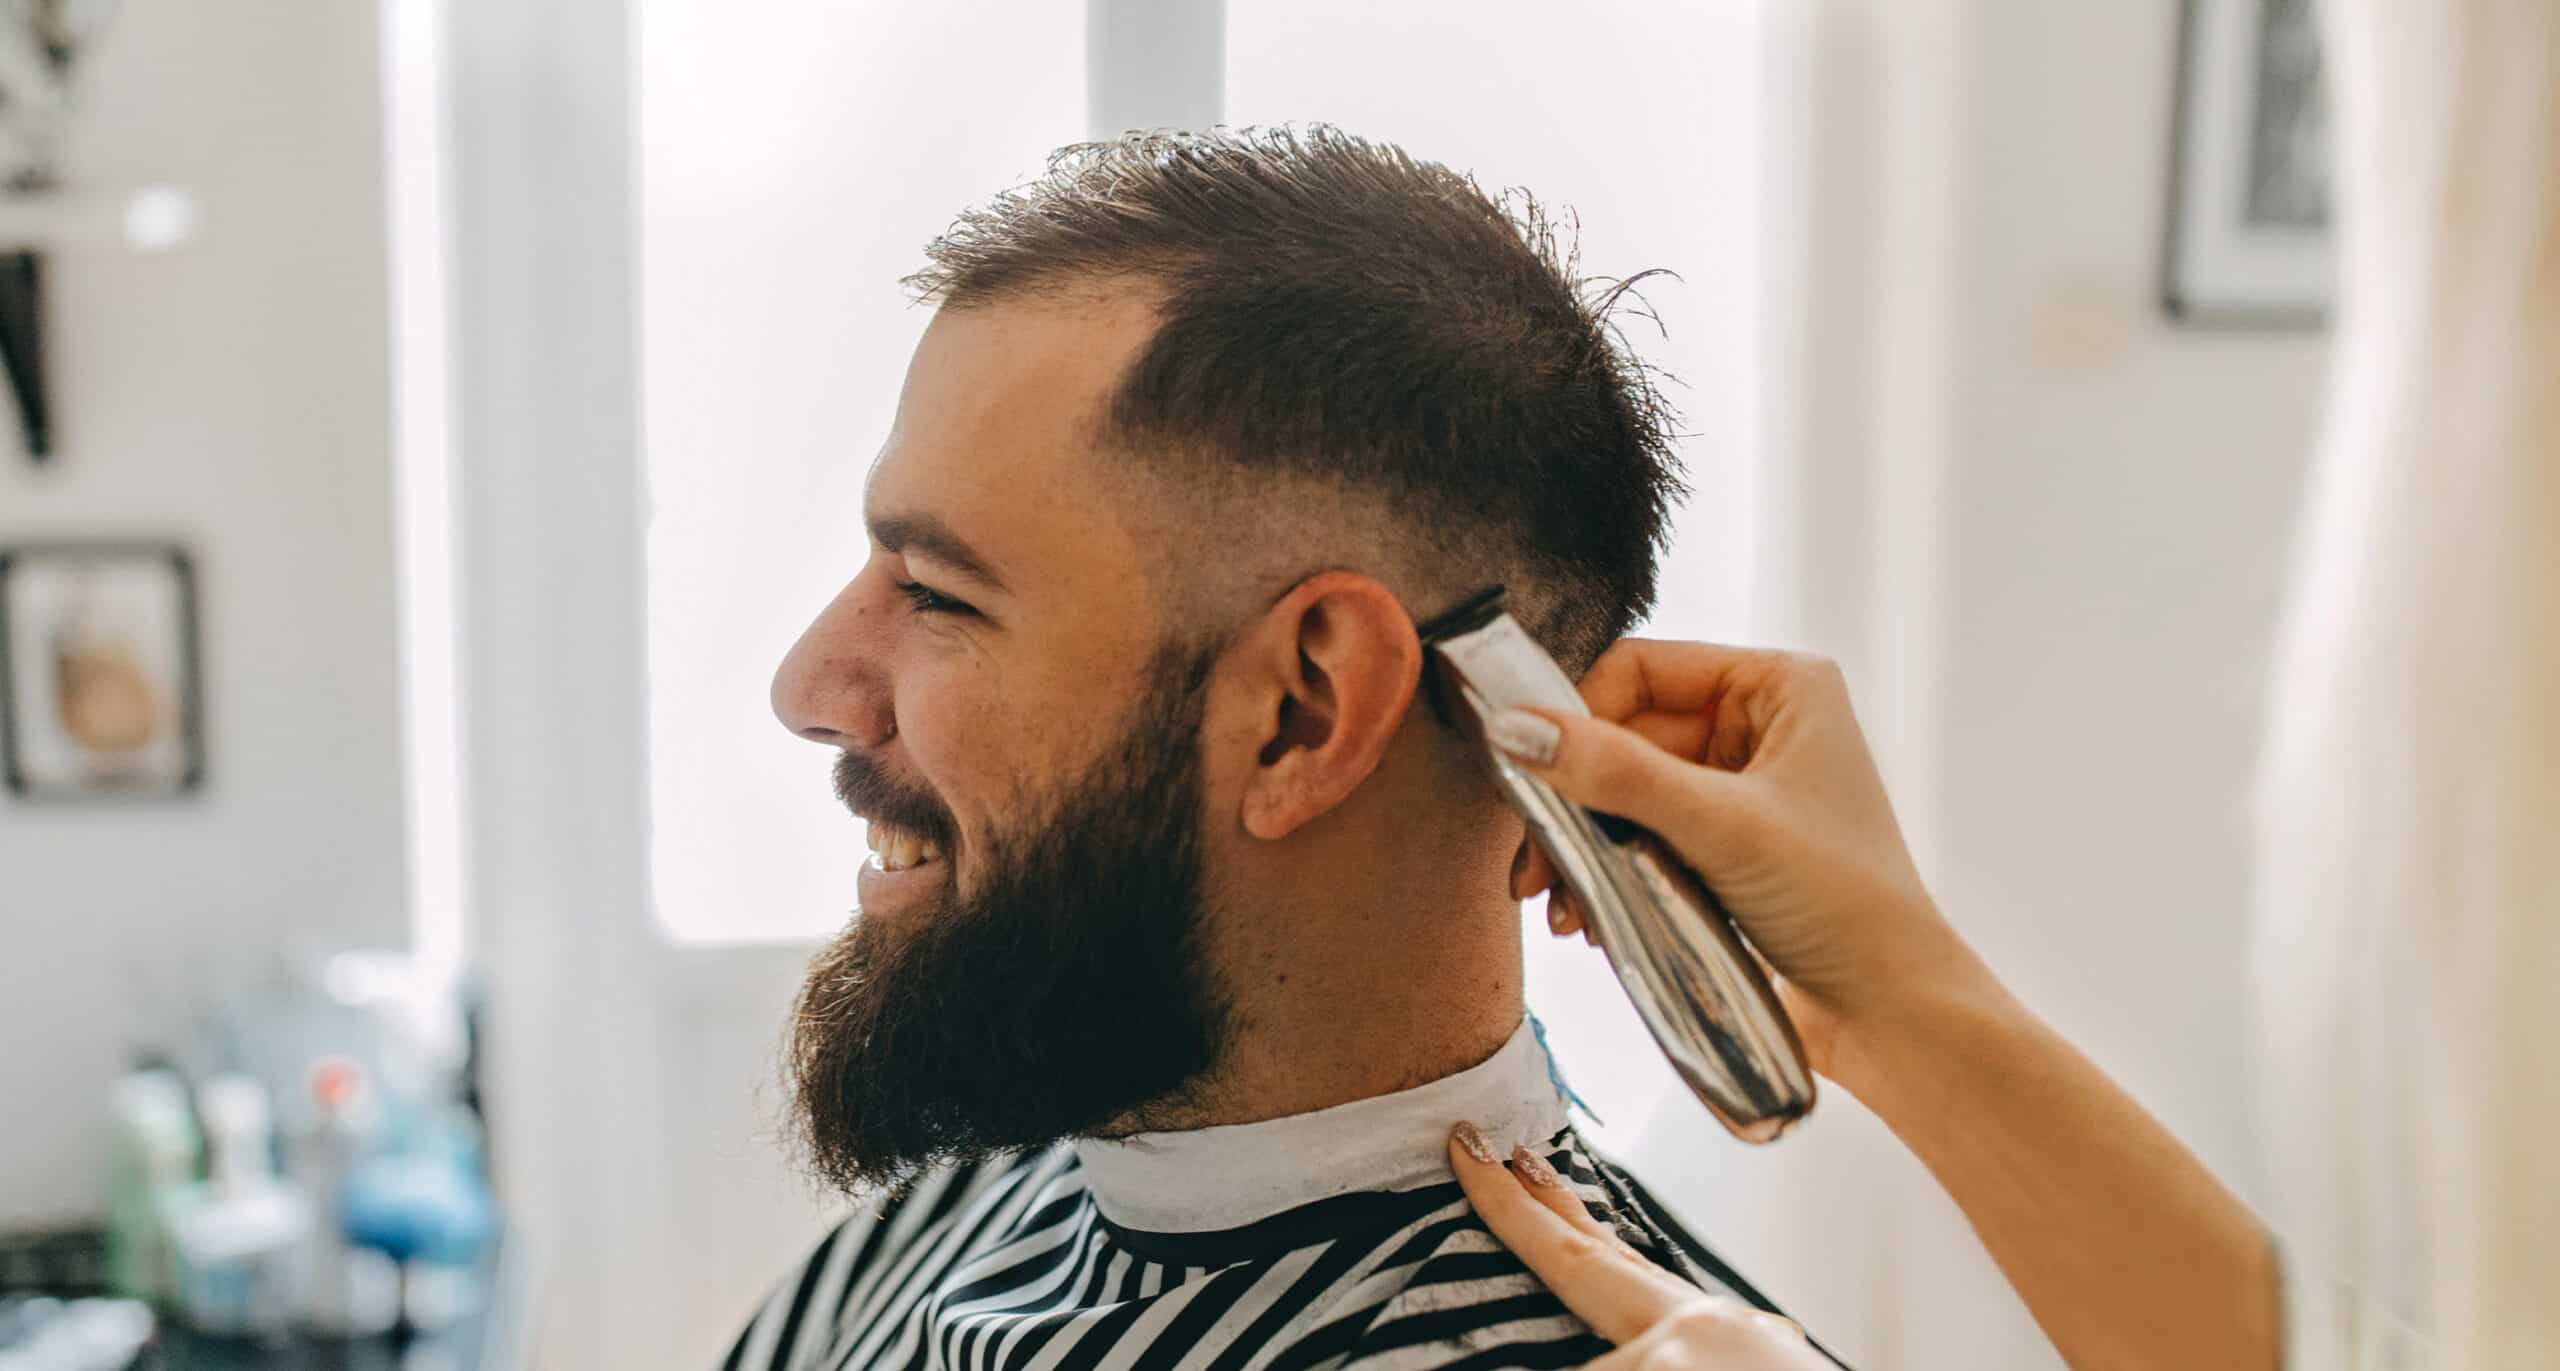 Line Up Haircut : Unique Haircut Shape - Men's Hairstyles & Haircuts 2019